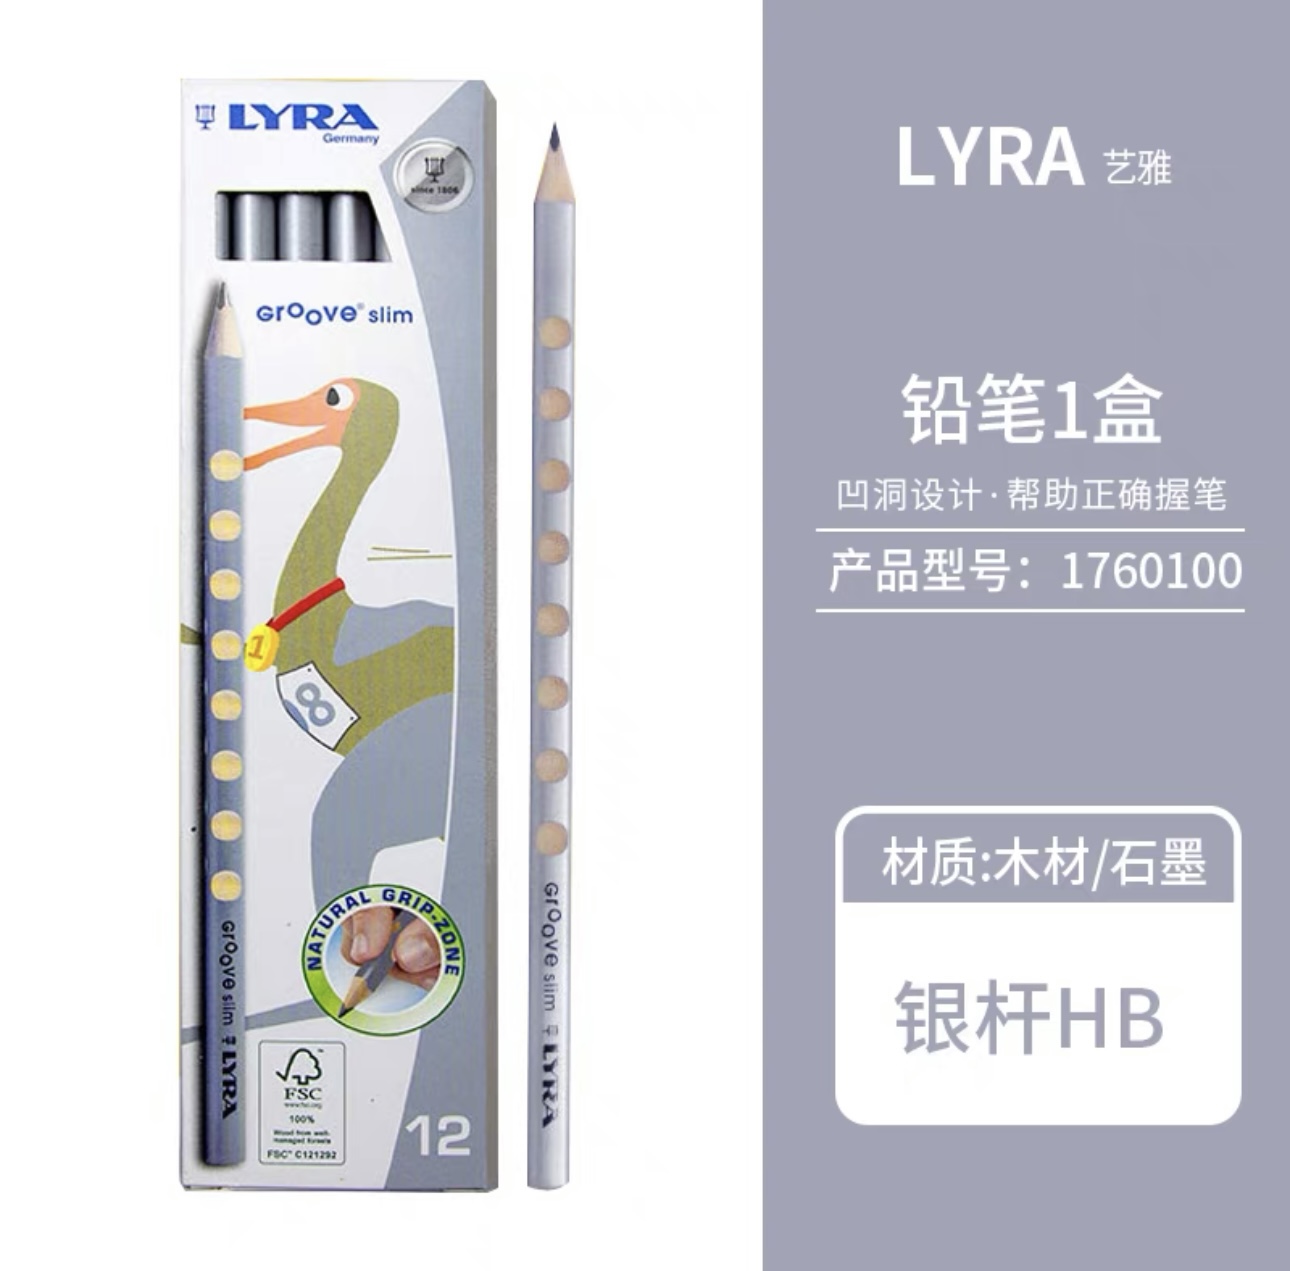 LYRA HB Silver Pole (12pcs/box) Triangle Hole Pencil